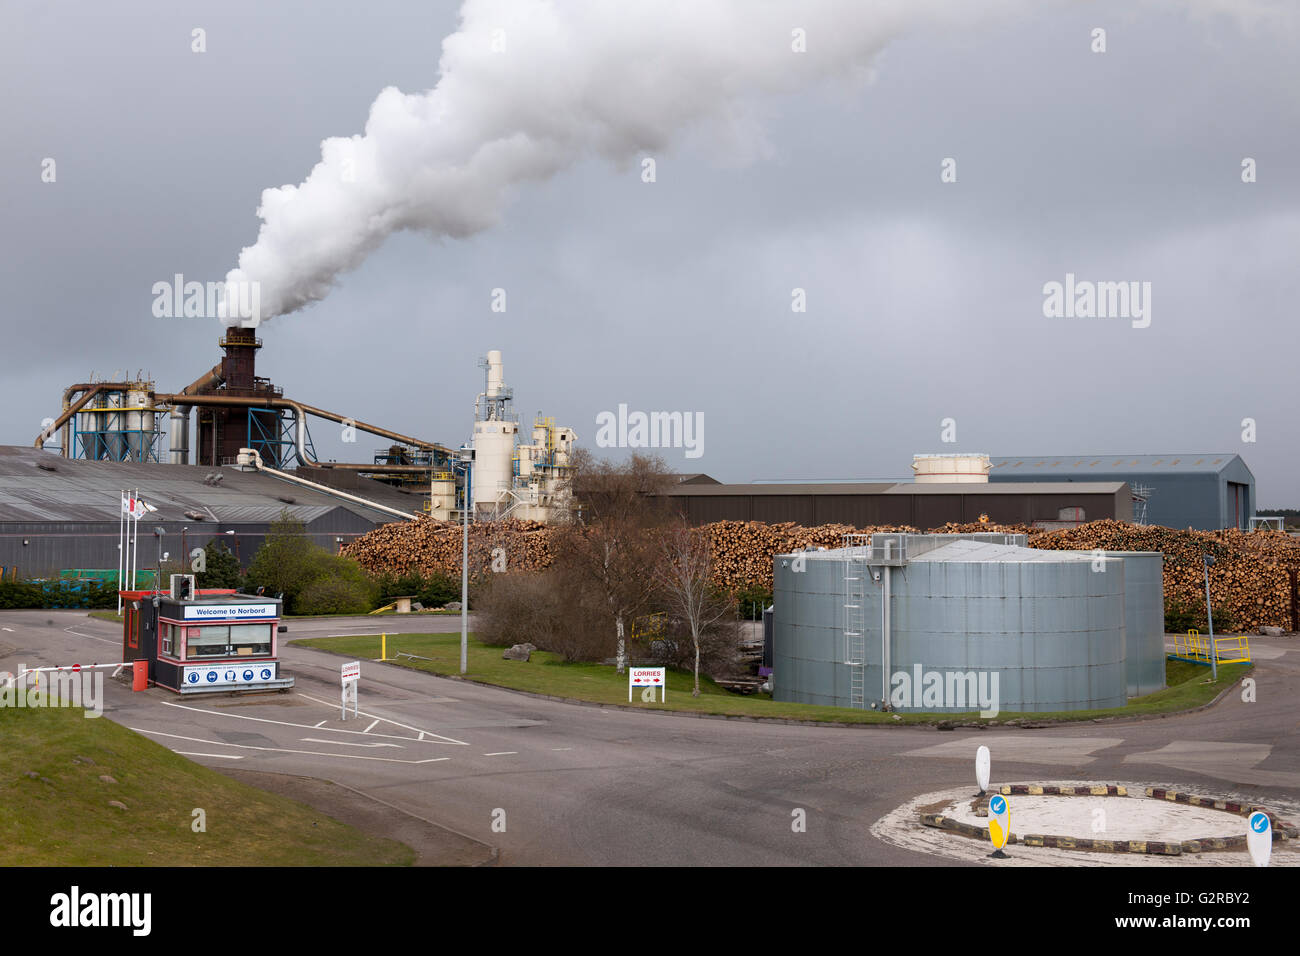 Norbord processing plant, Morayhill, Dalcross, Invernesshire, Scotland, UK. Stock Photo